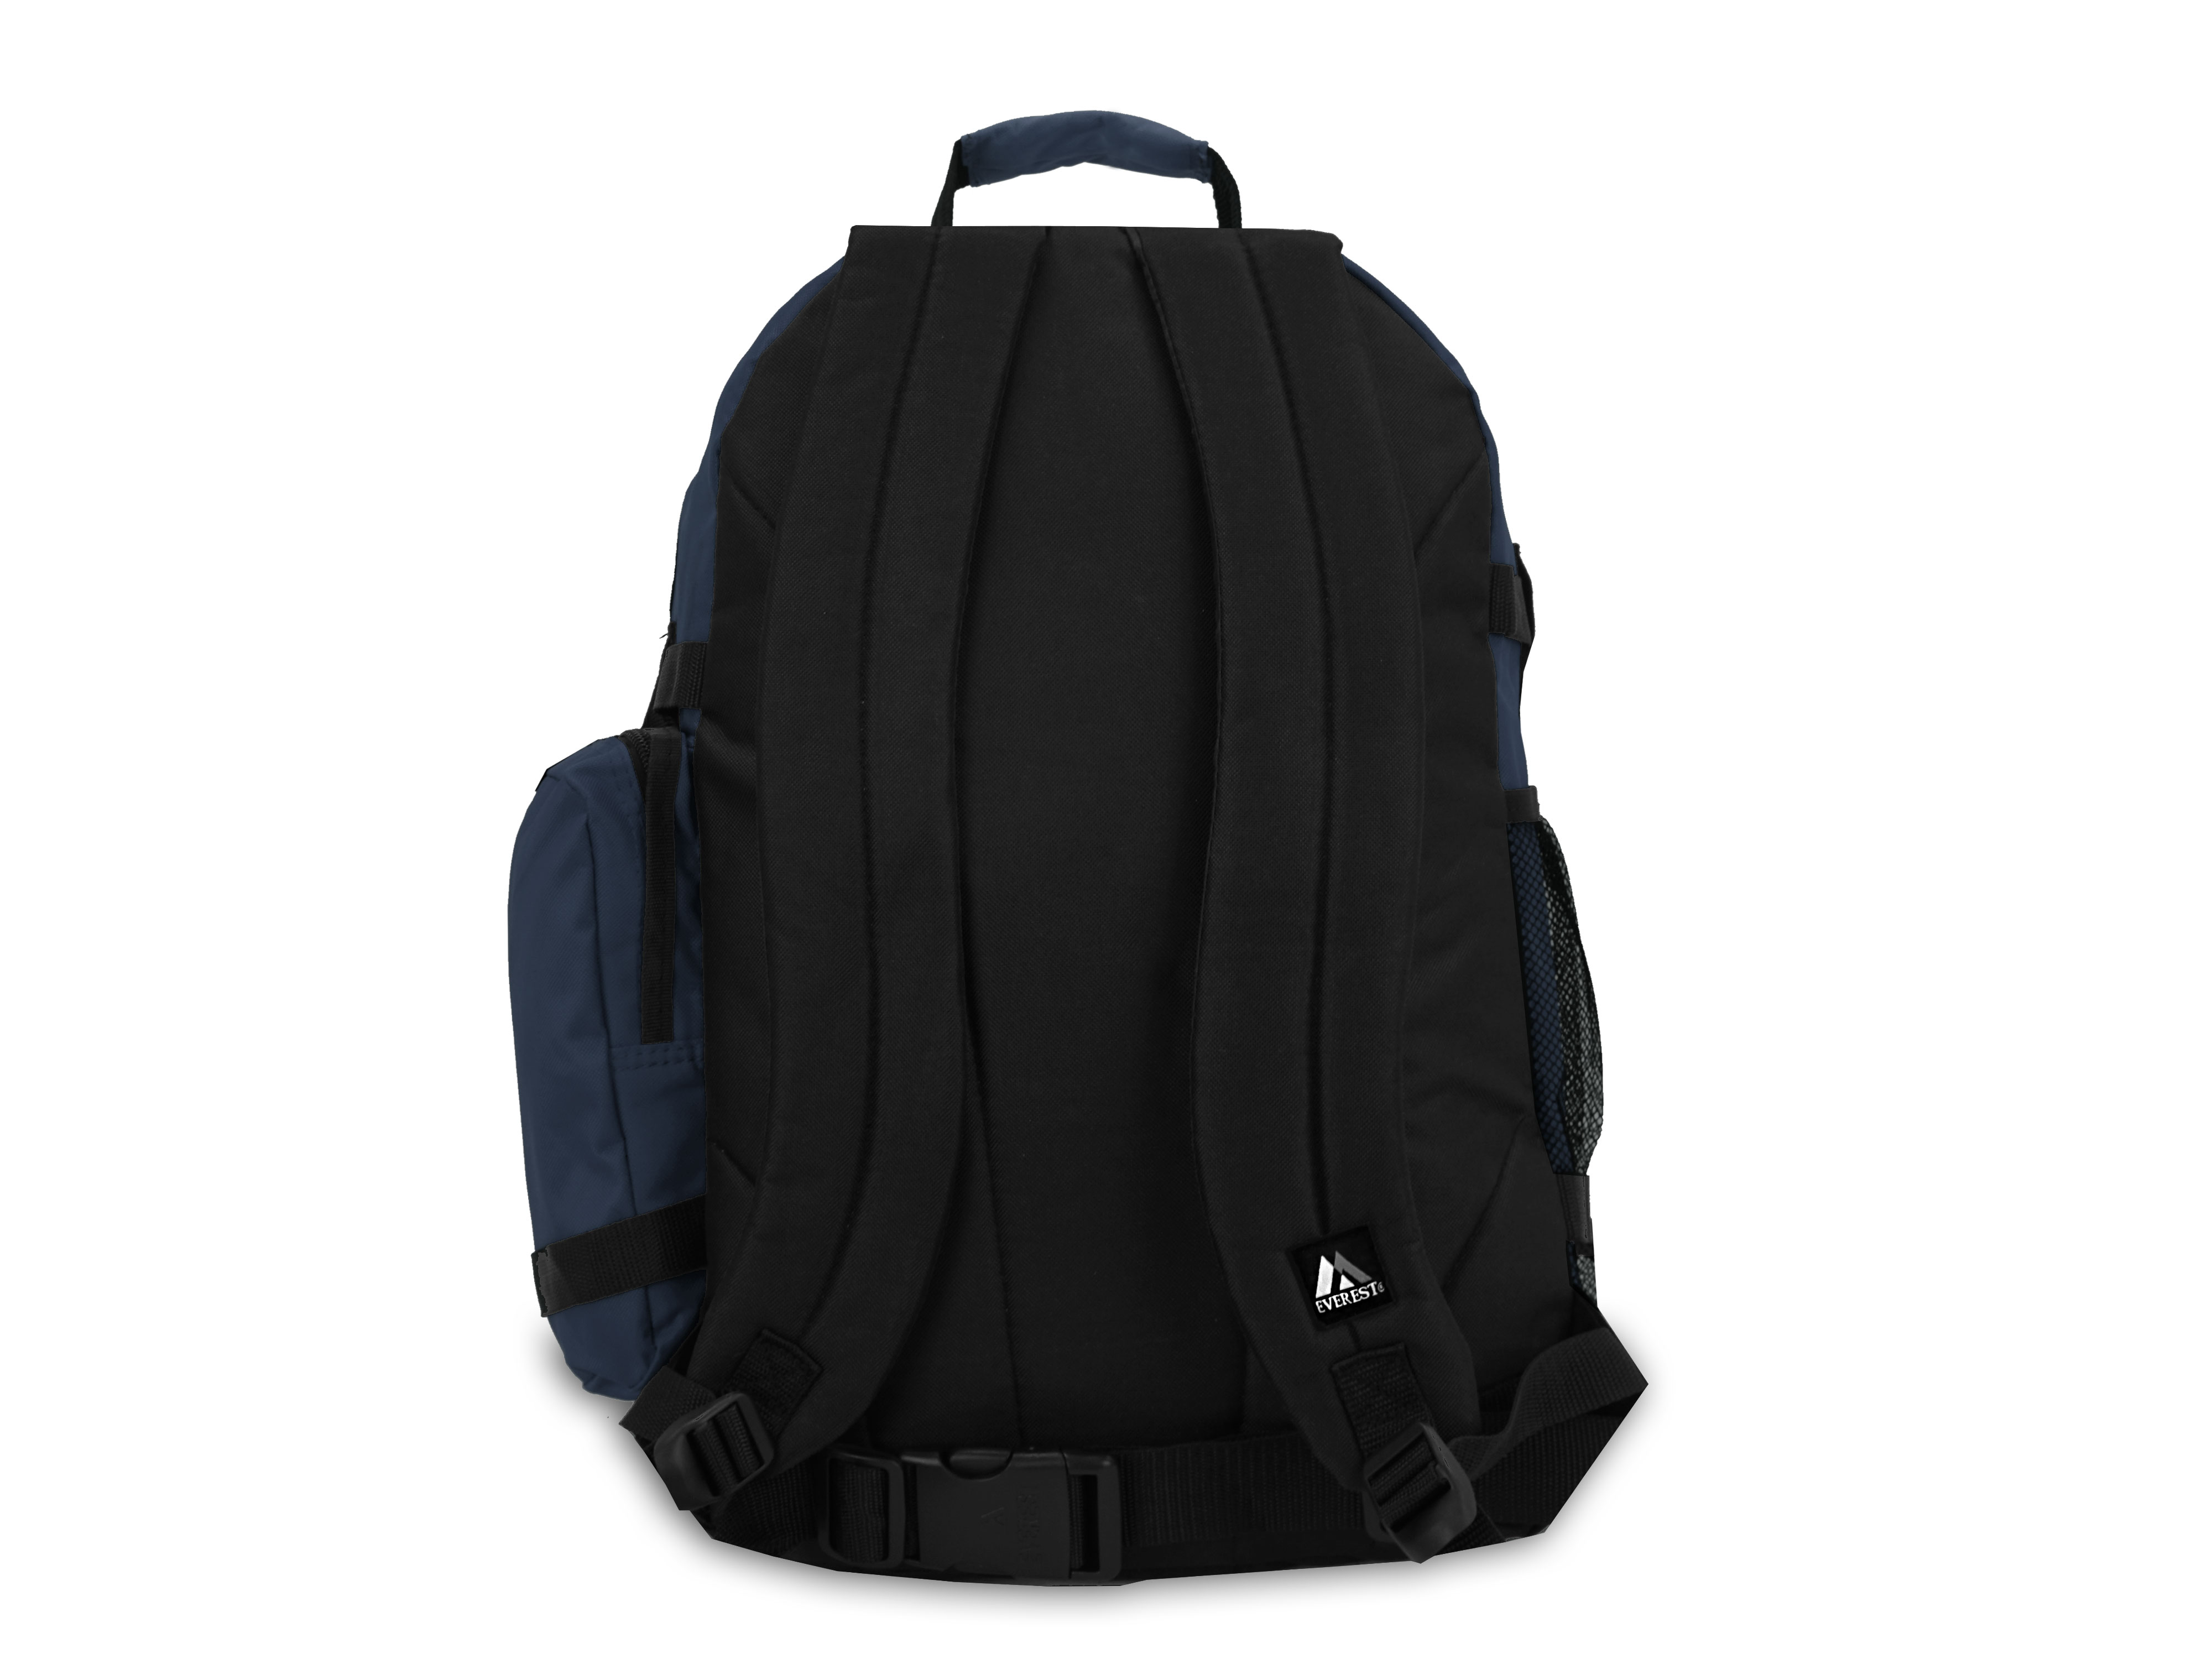 Everest Unisex Oversize Deluxe Backpack Navy Blue Black - image 3 of 5